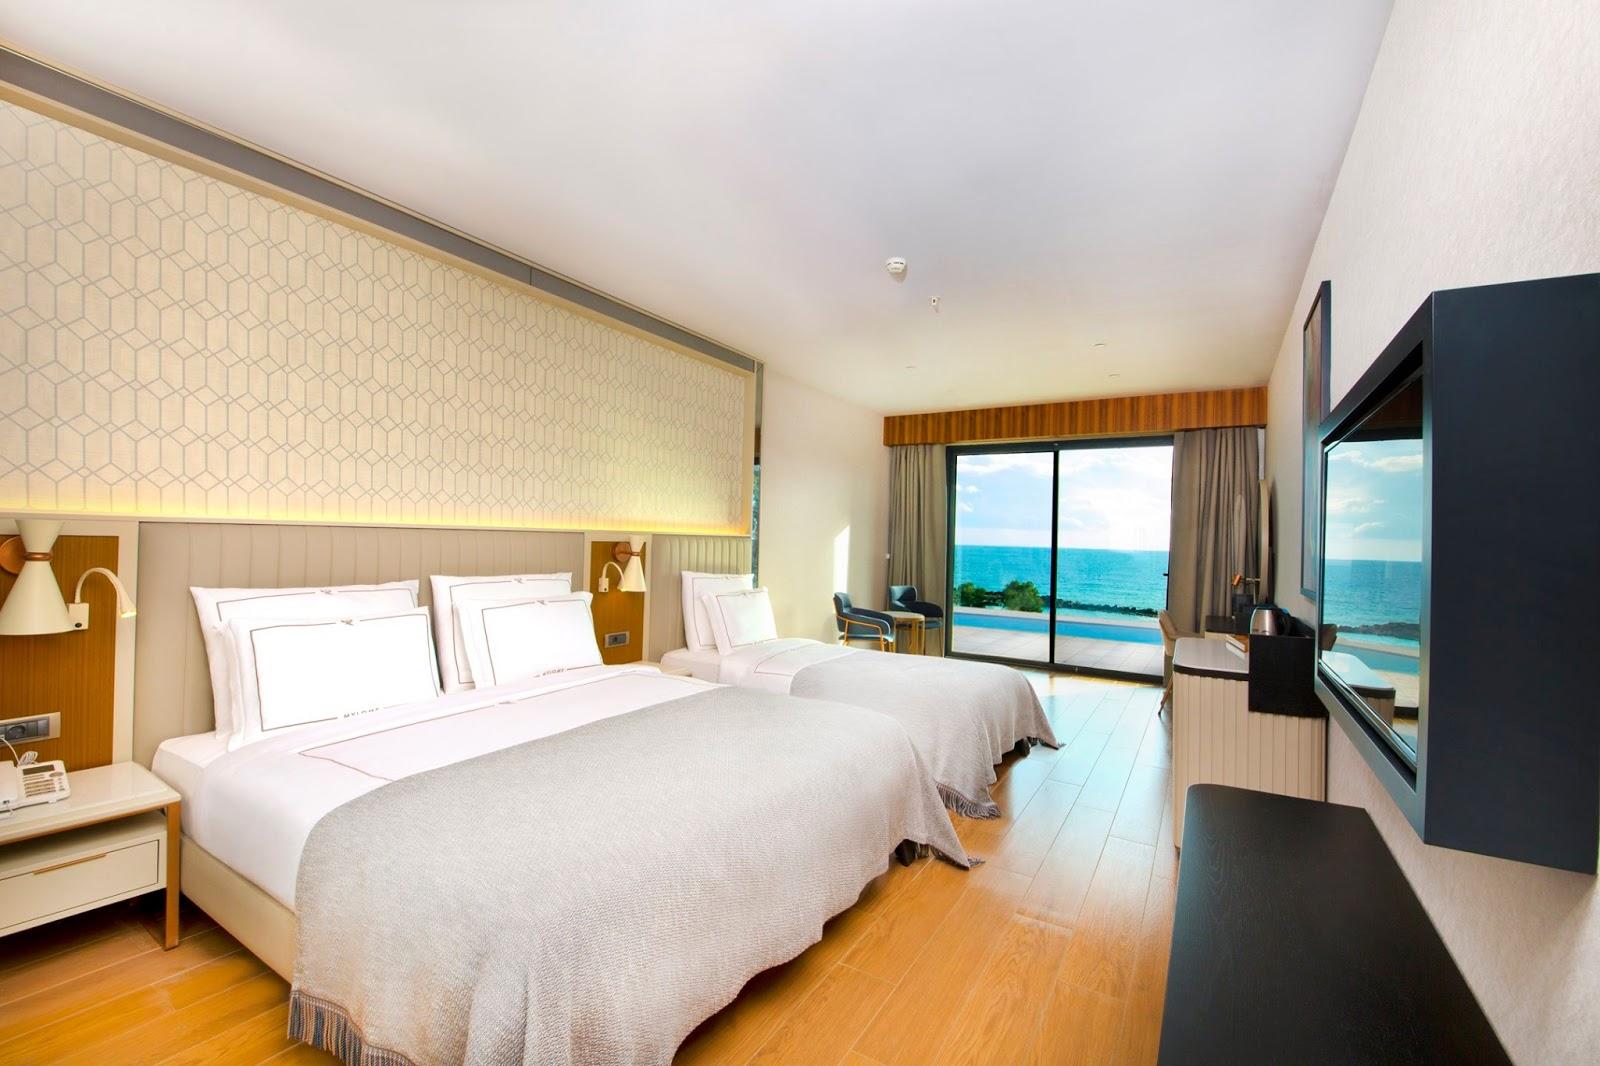 Sandee - Mylome Luxury Hotel & Resort Beach